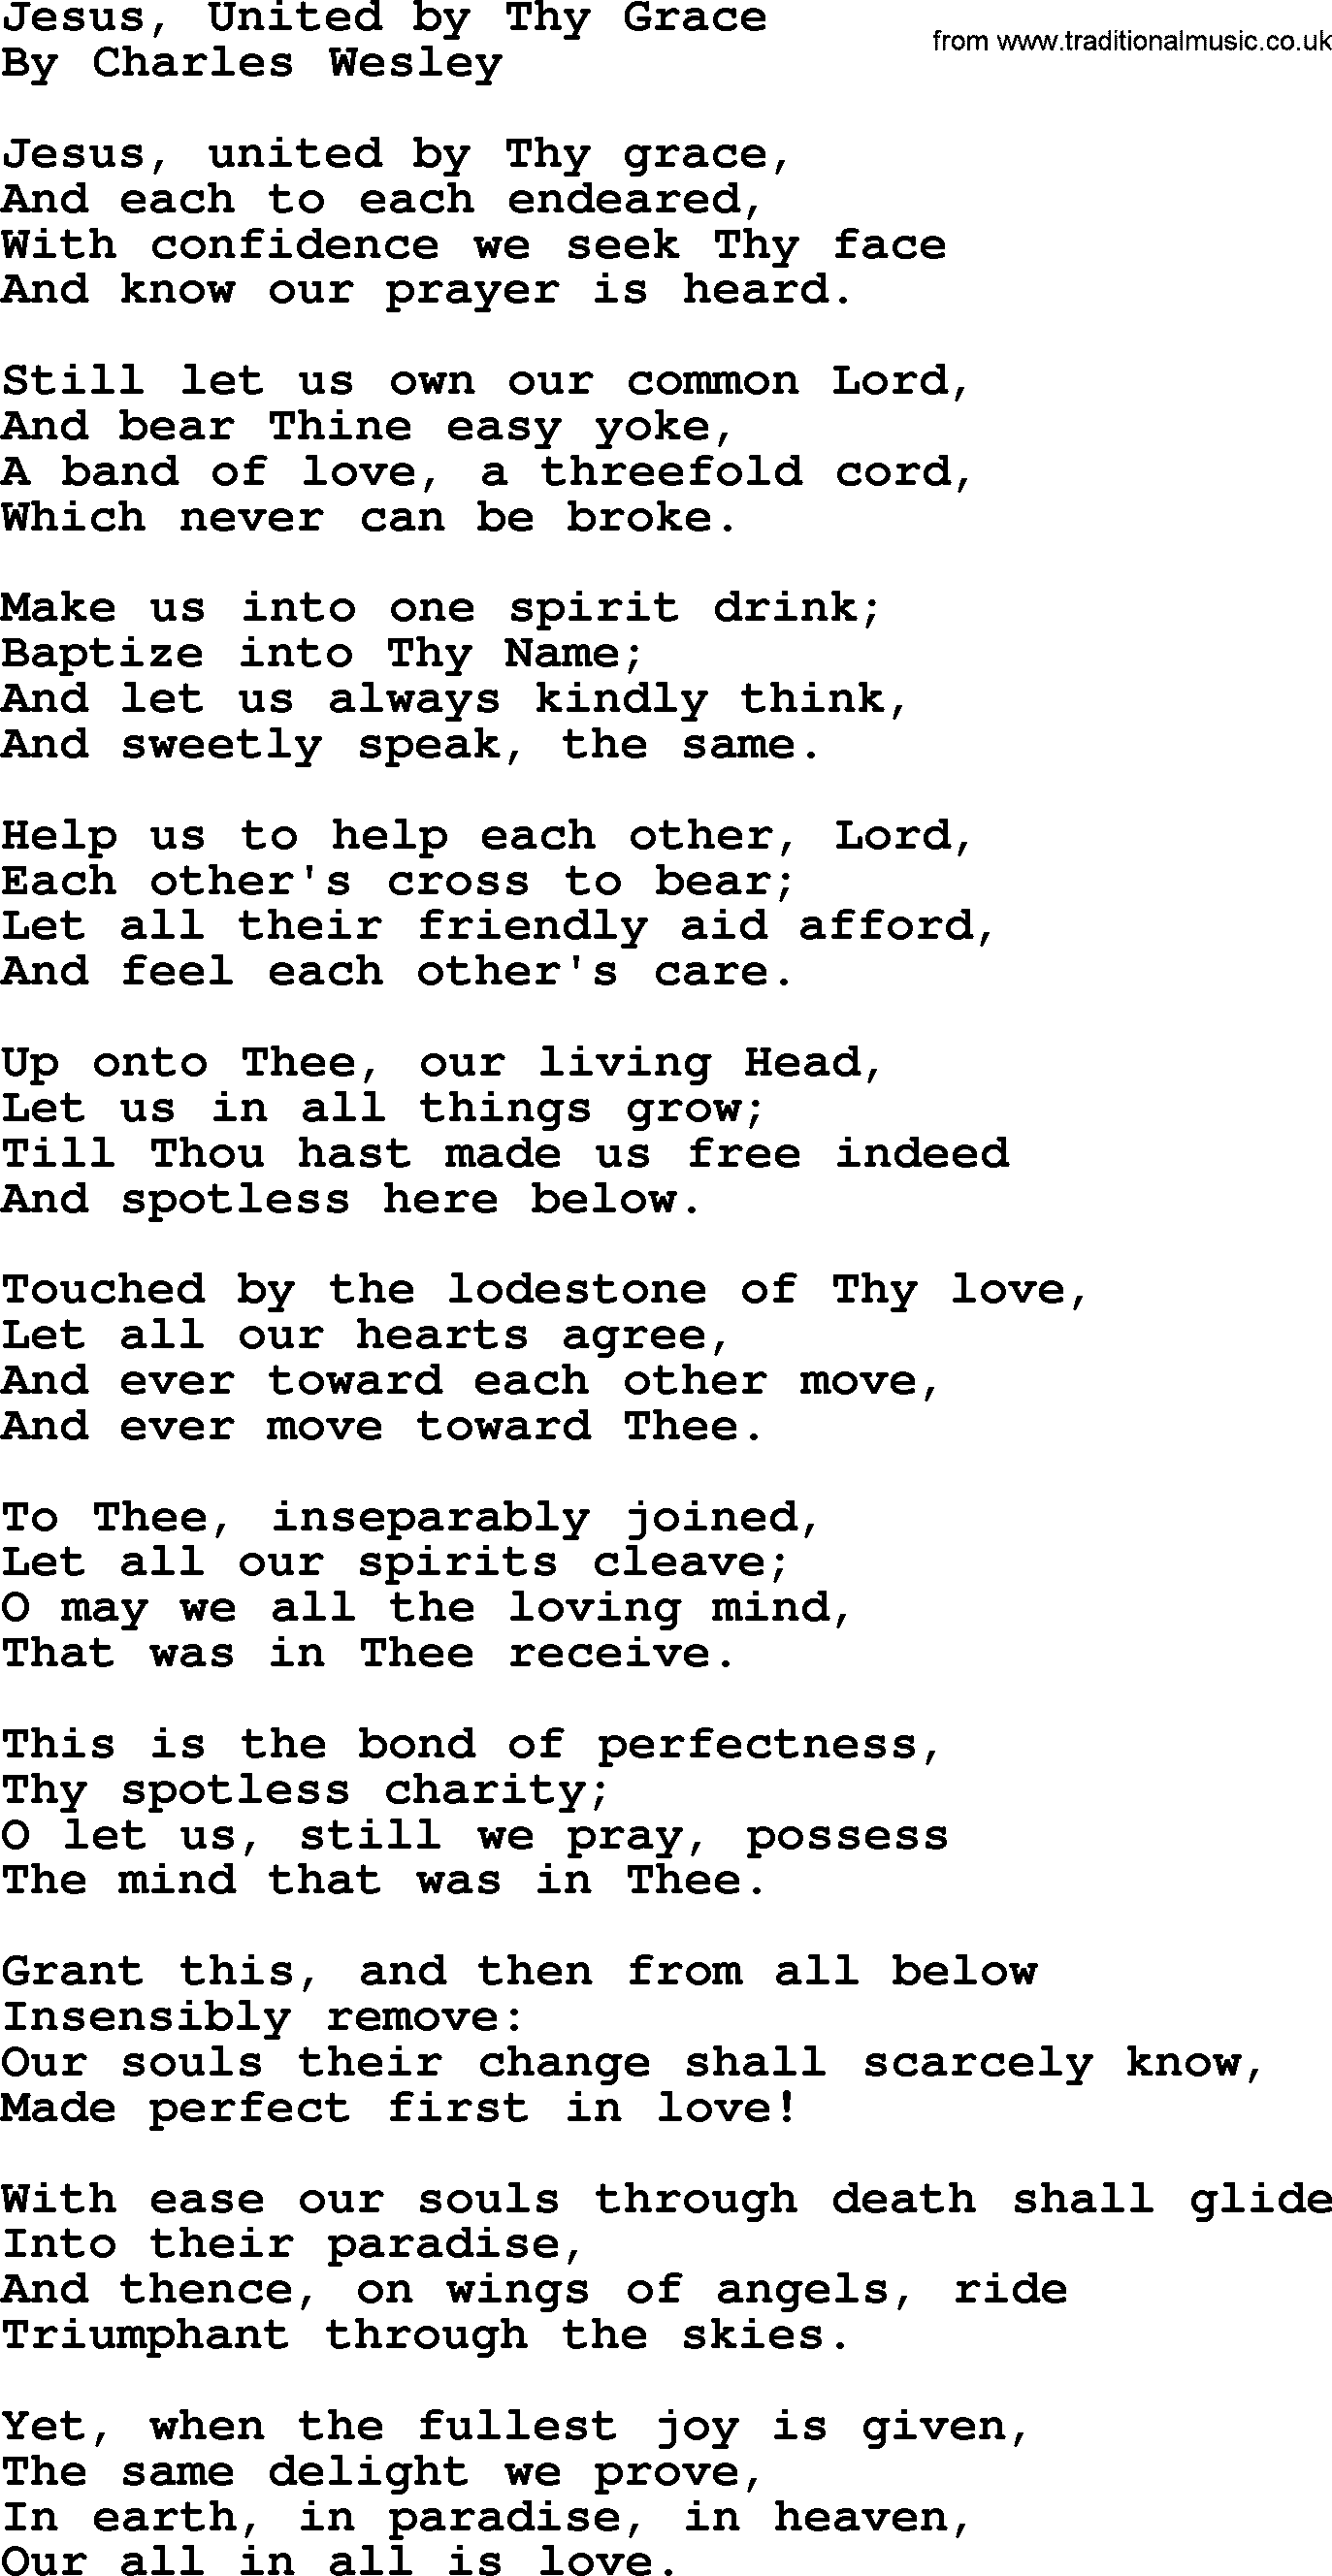 Charles Wesley hymn: Jesus, United By Thy Grace, lyrics